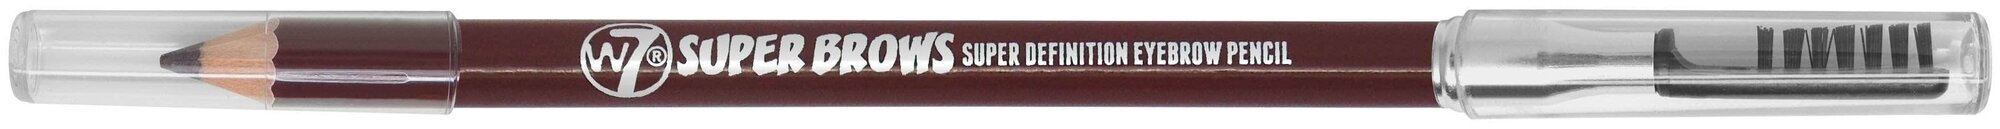 Карандаш для бровей W7 SUPER BROWS super defintion eyebrow pensil оттенок BROWN 1,5g